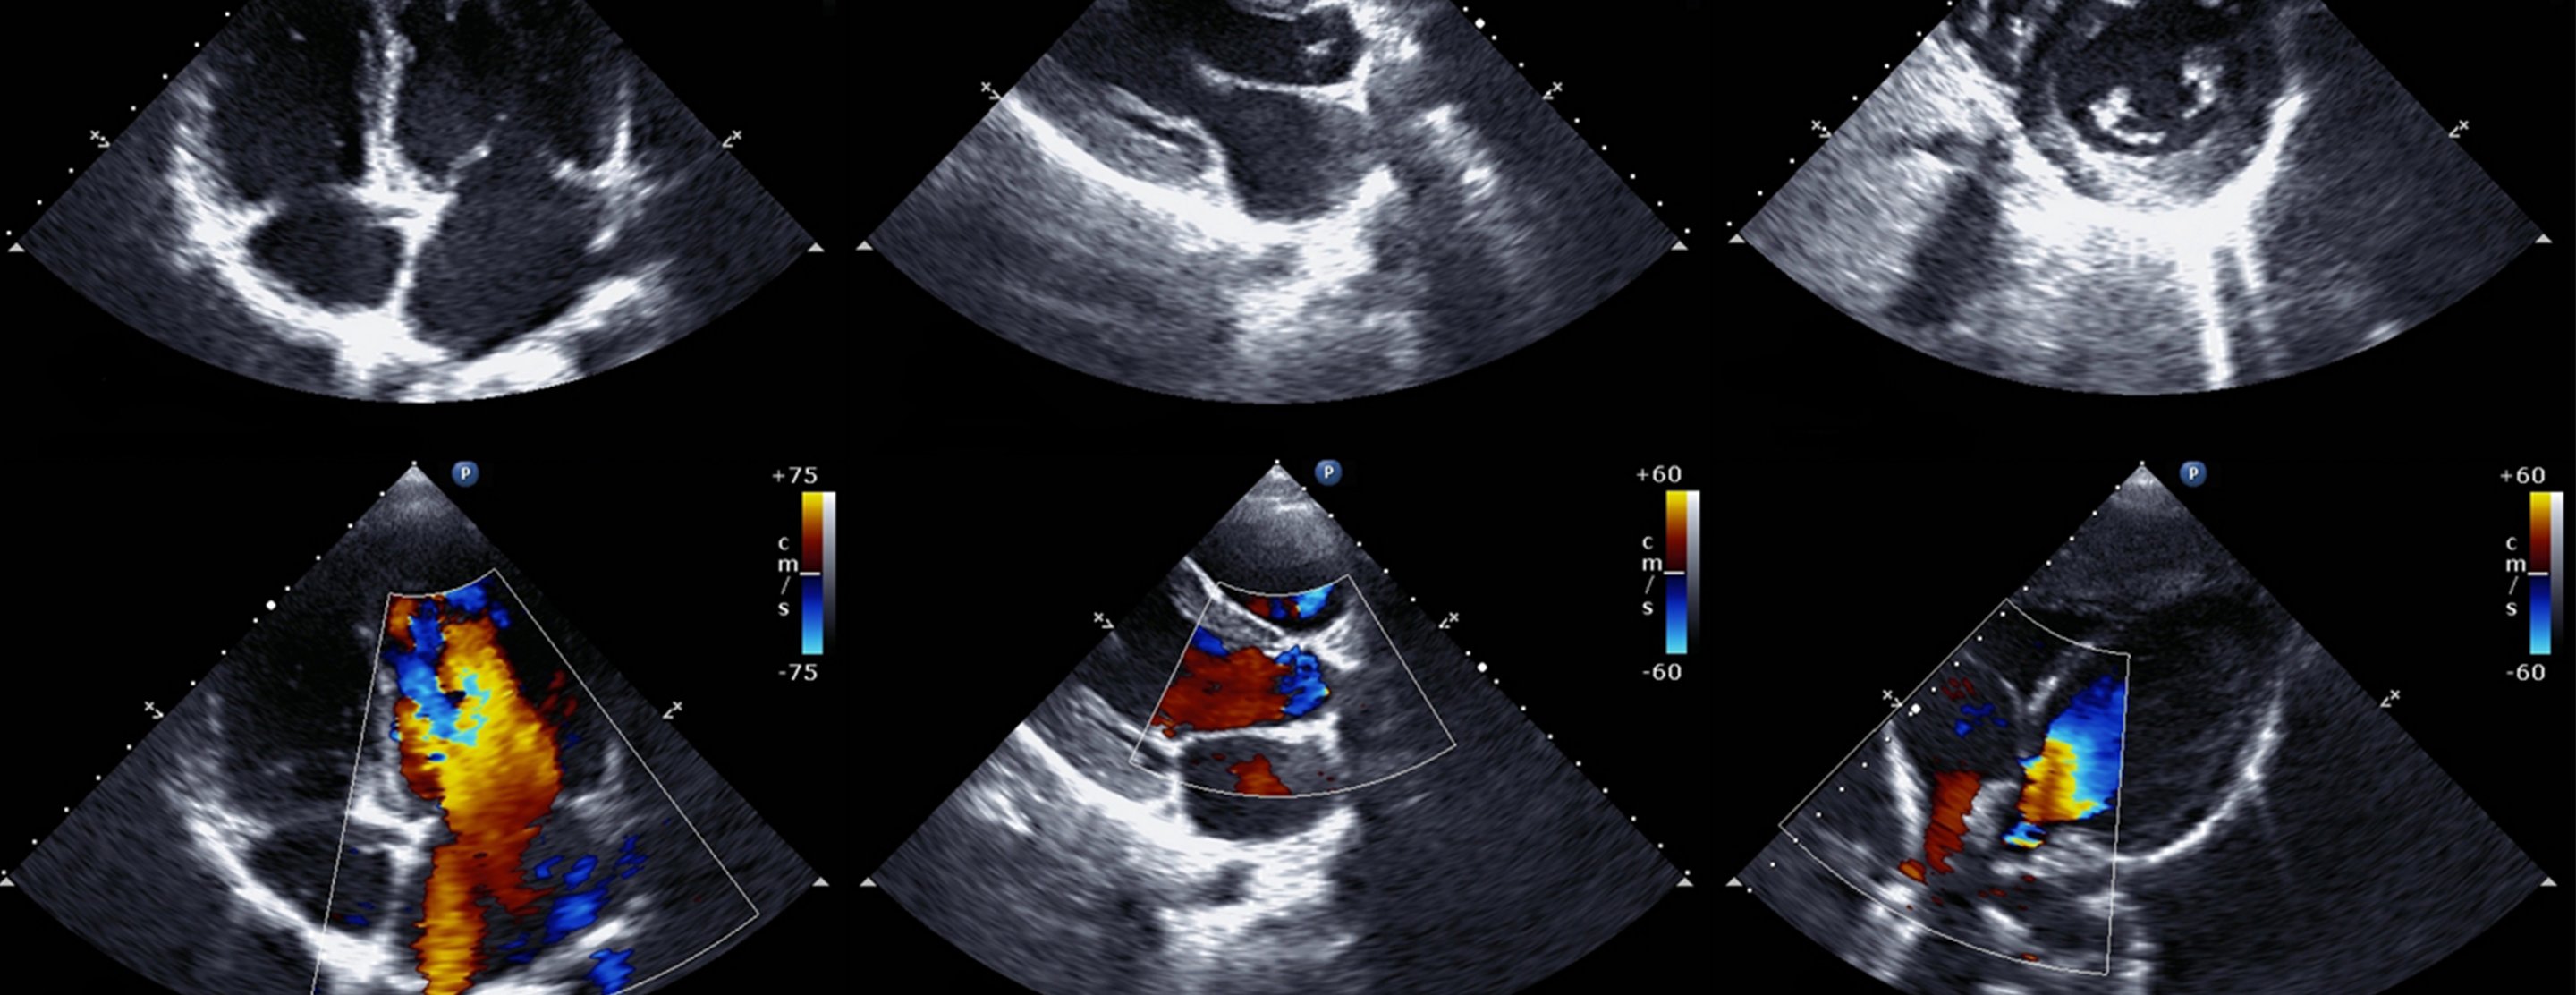 abnormal echocardiogram results